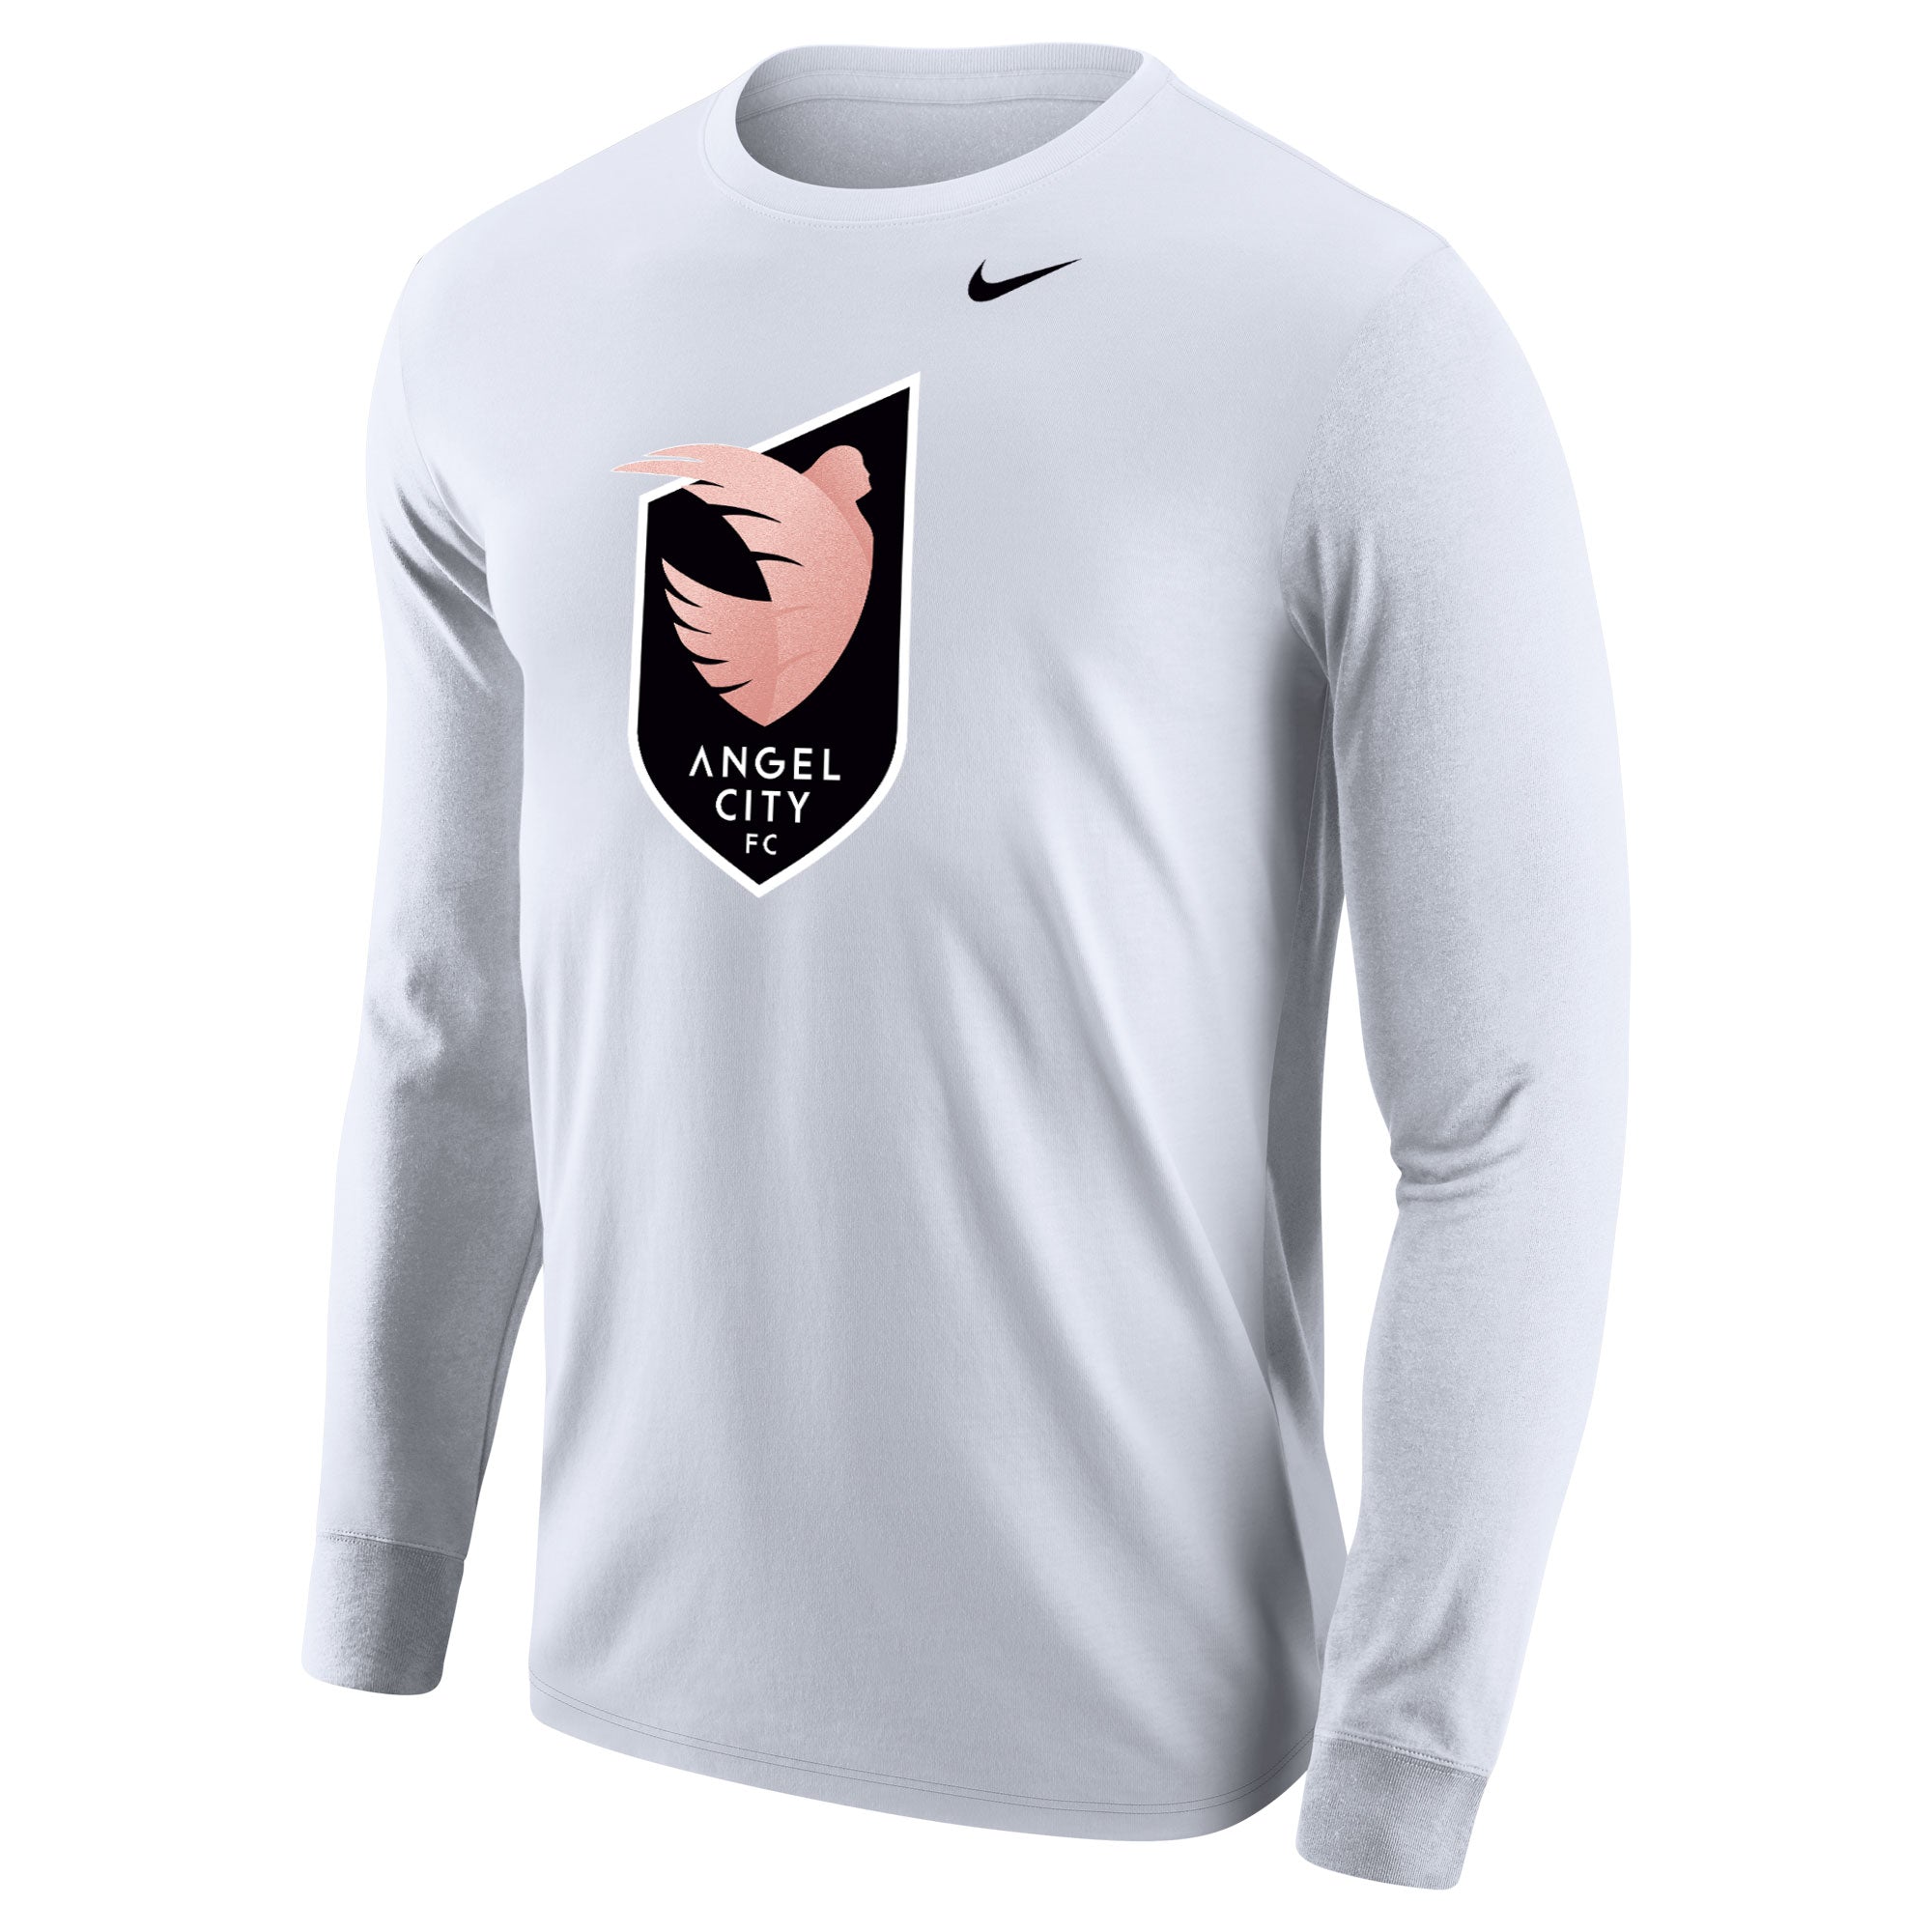 Angel City FC Nike Unisex Sol Rosa Crest White Long Sleeve Shirt